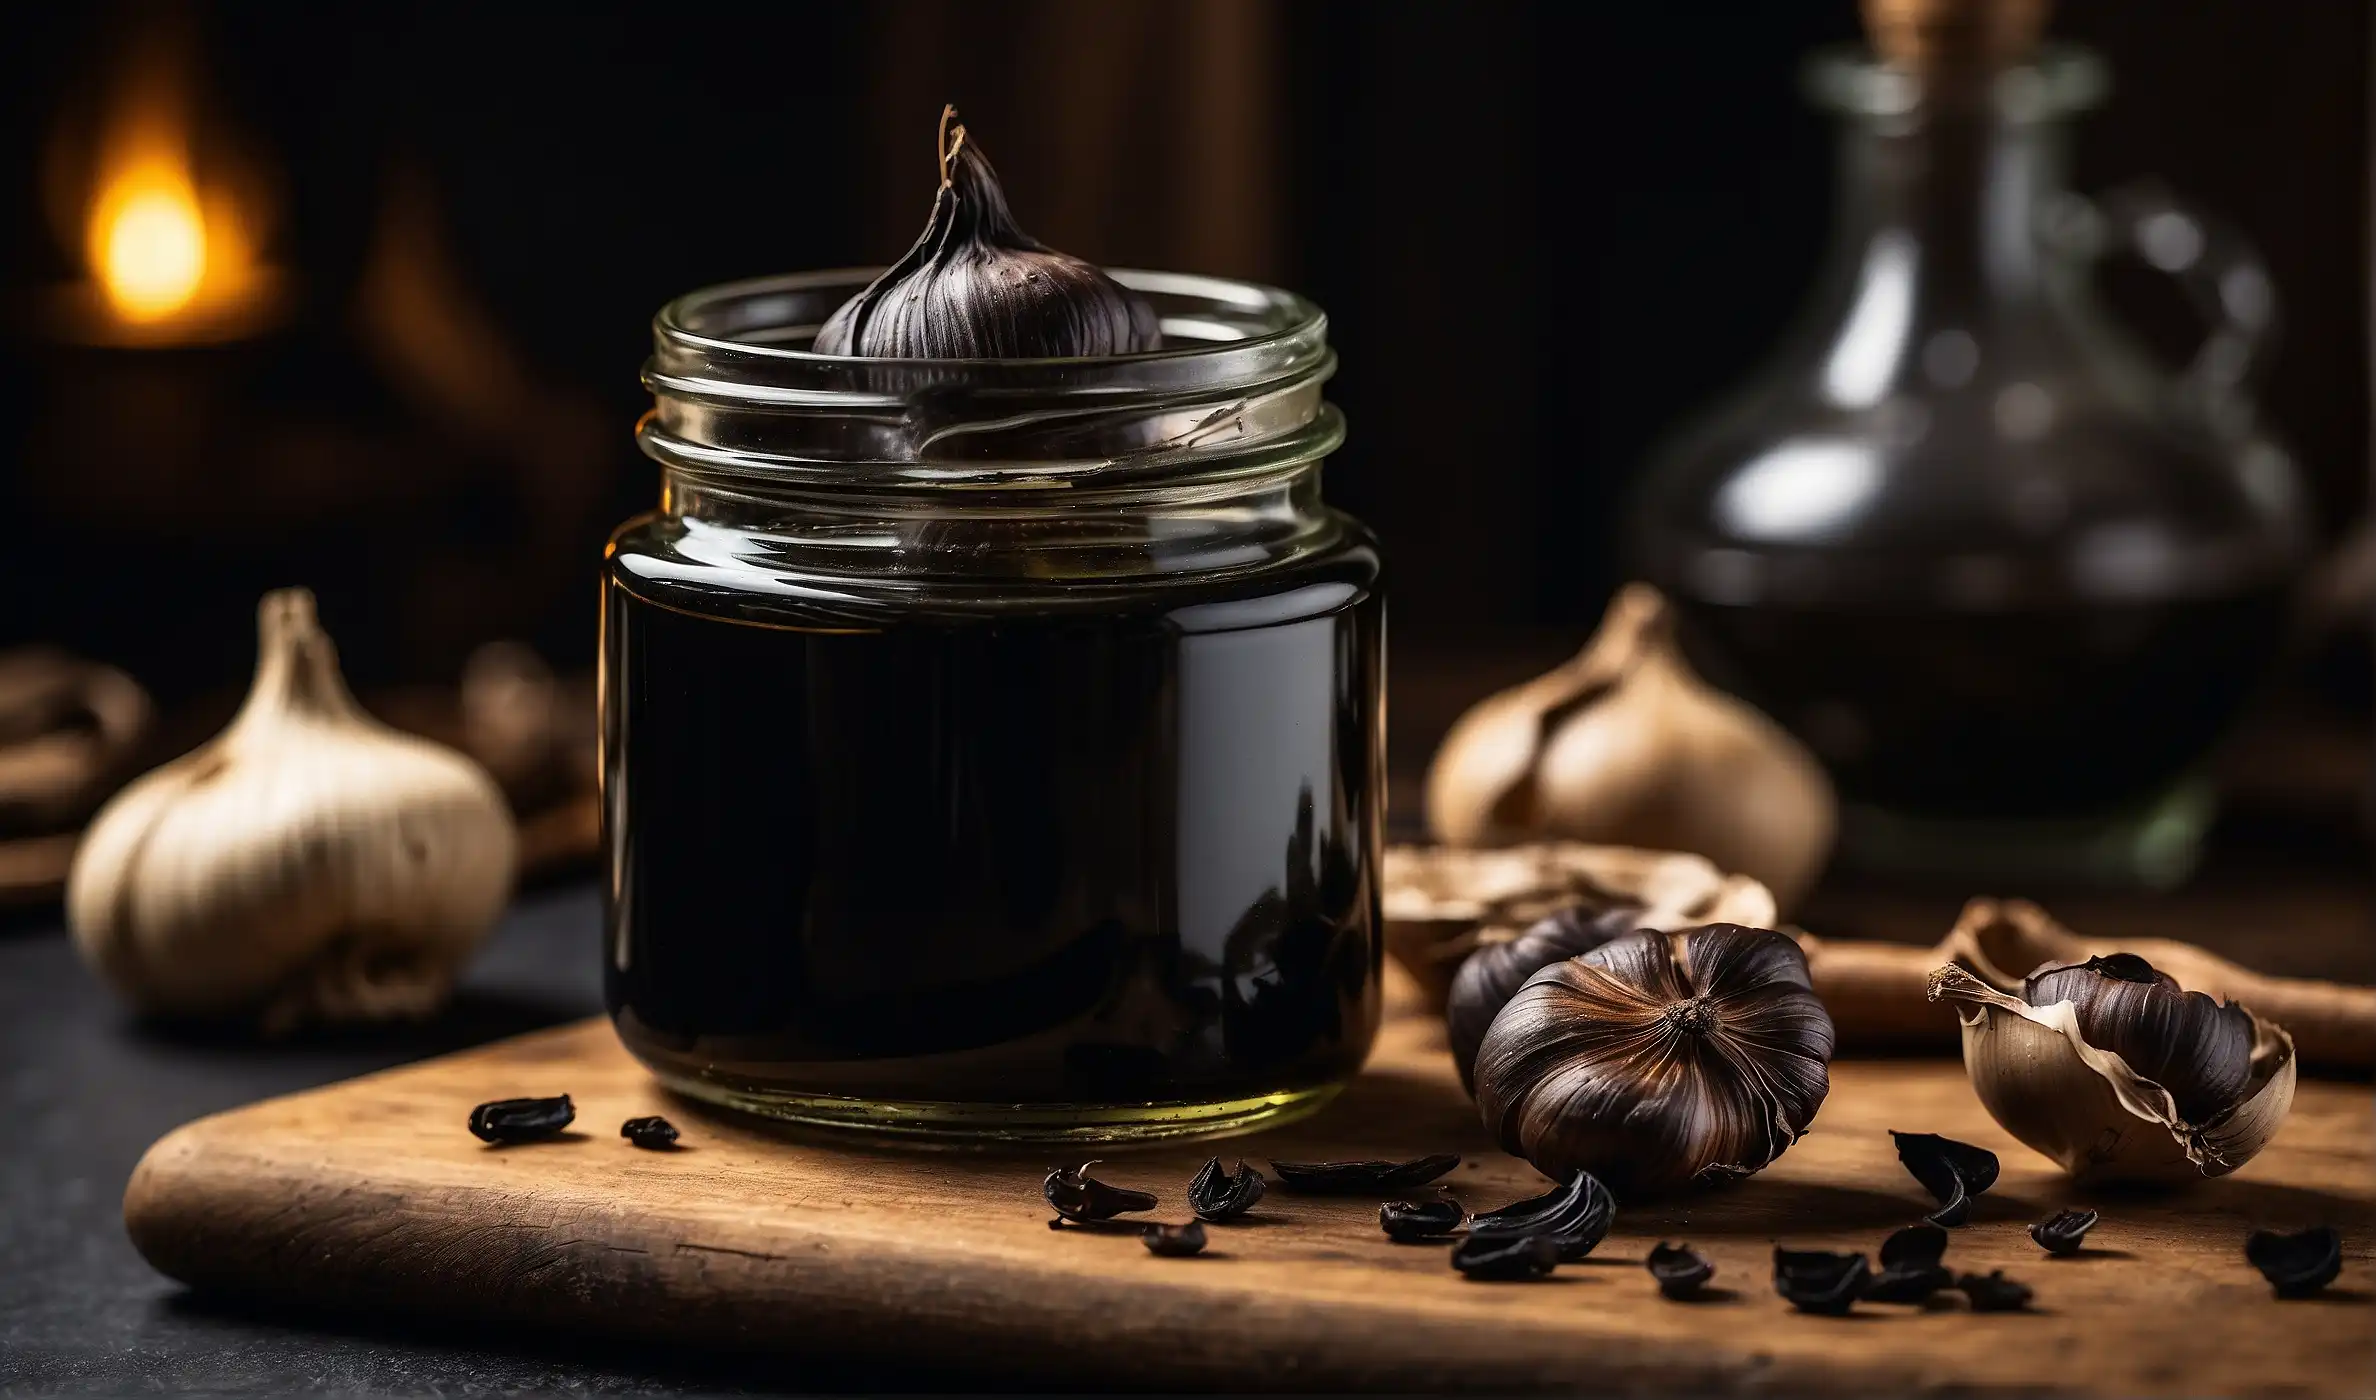 Black garlic oil in a glass jar